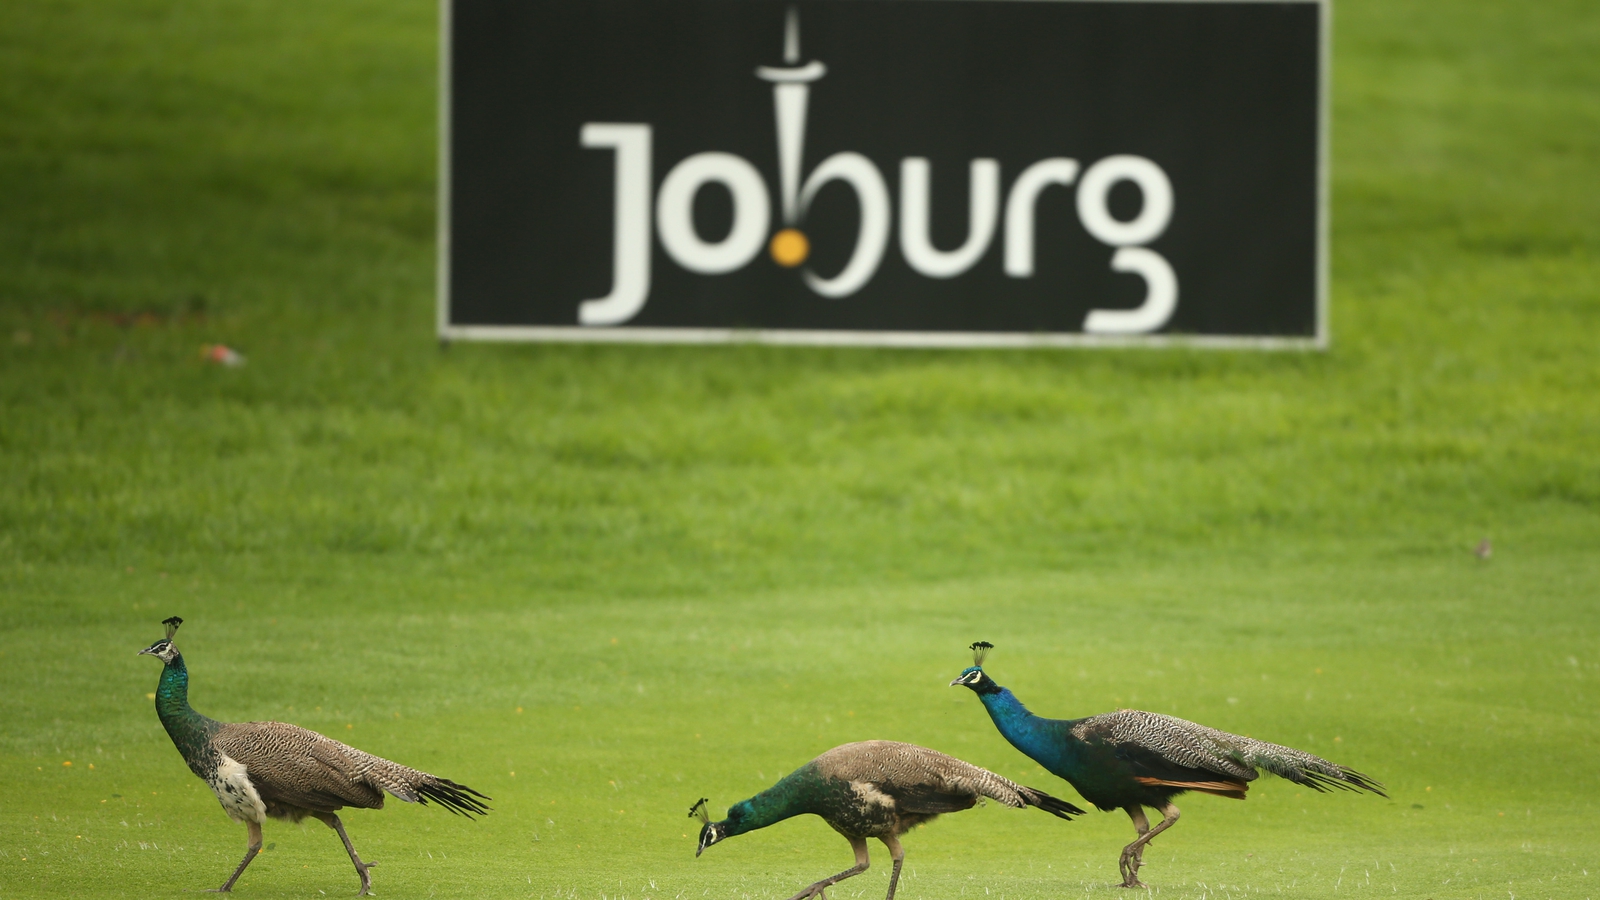 Joburg Open returns to European Tour after three years